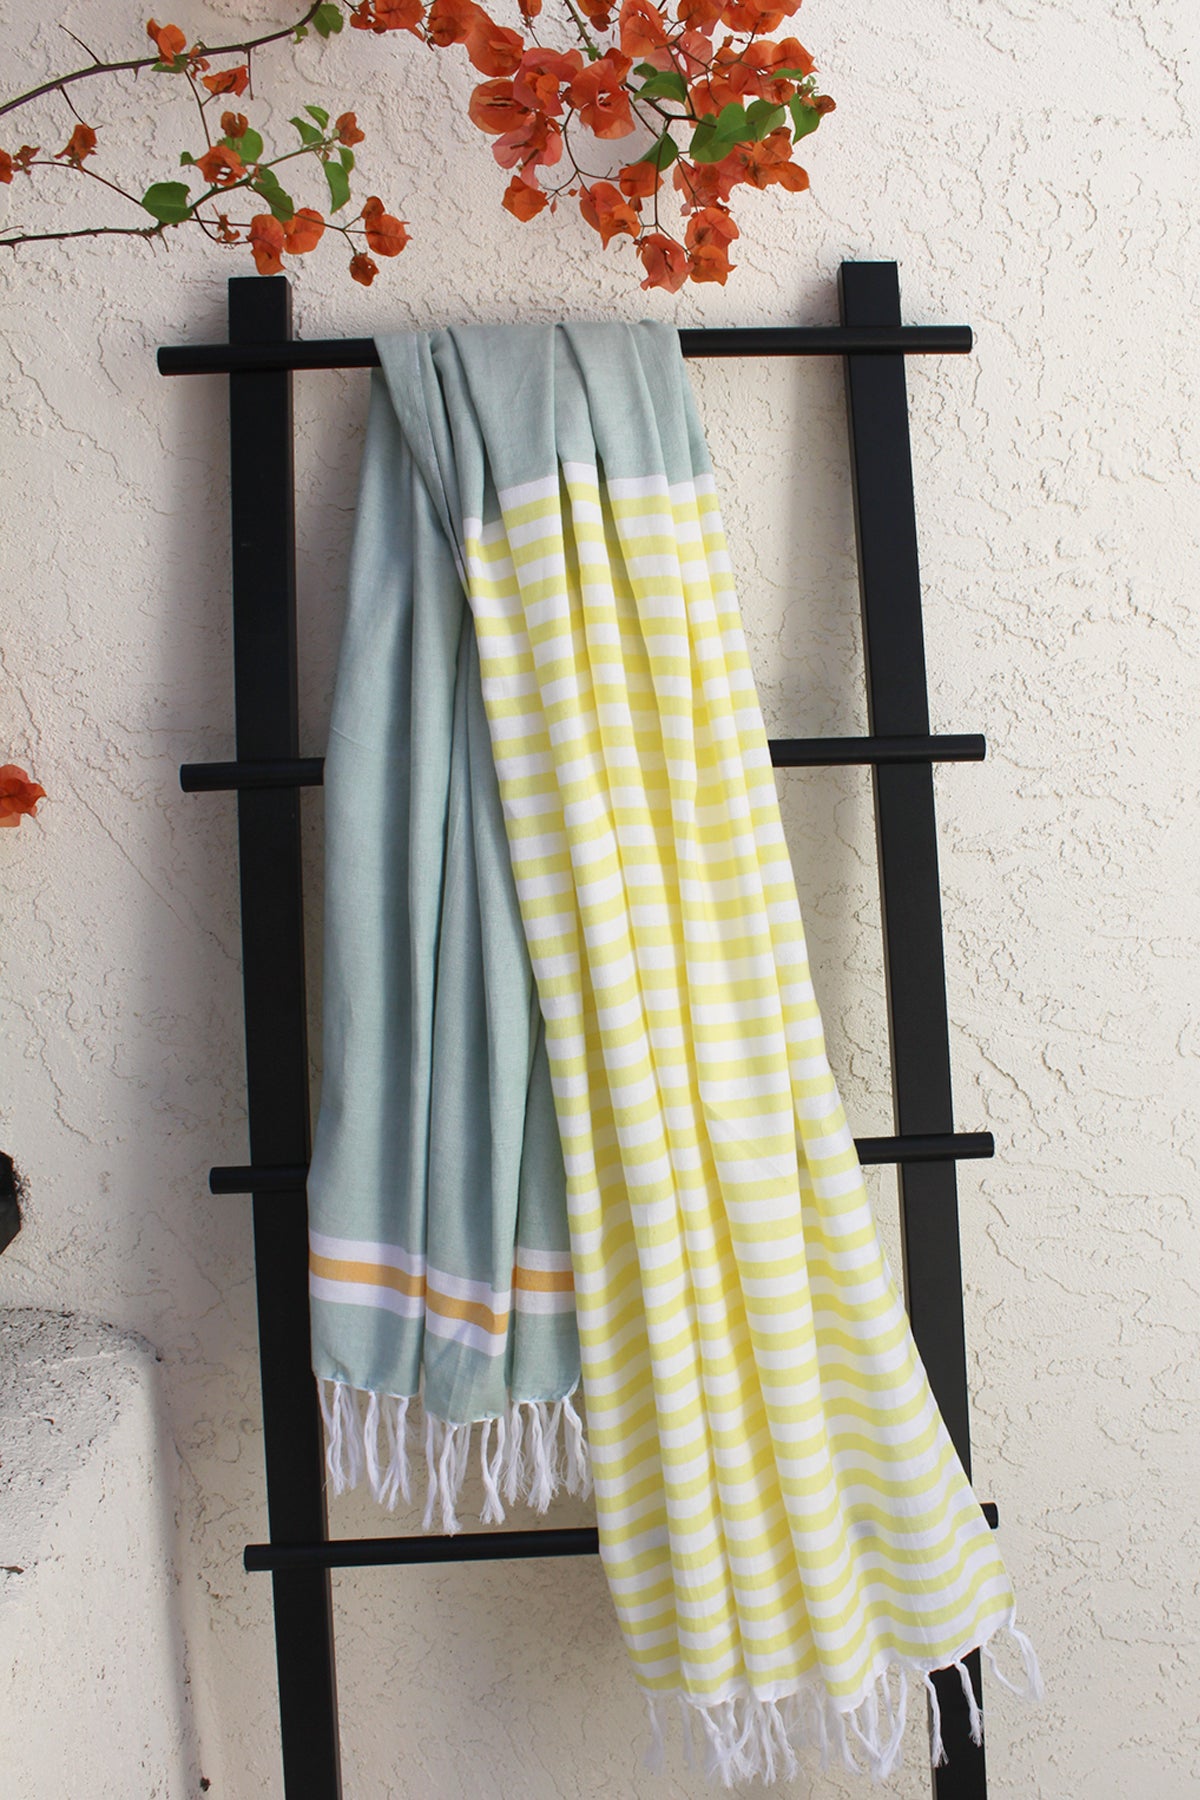 Lemonade textile, featured in Vogue!